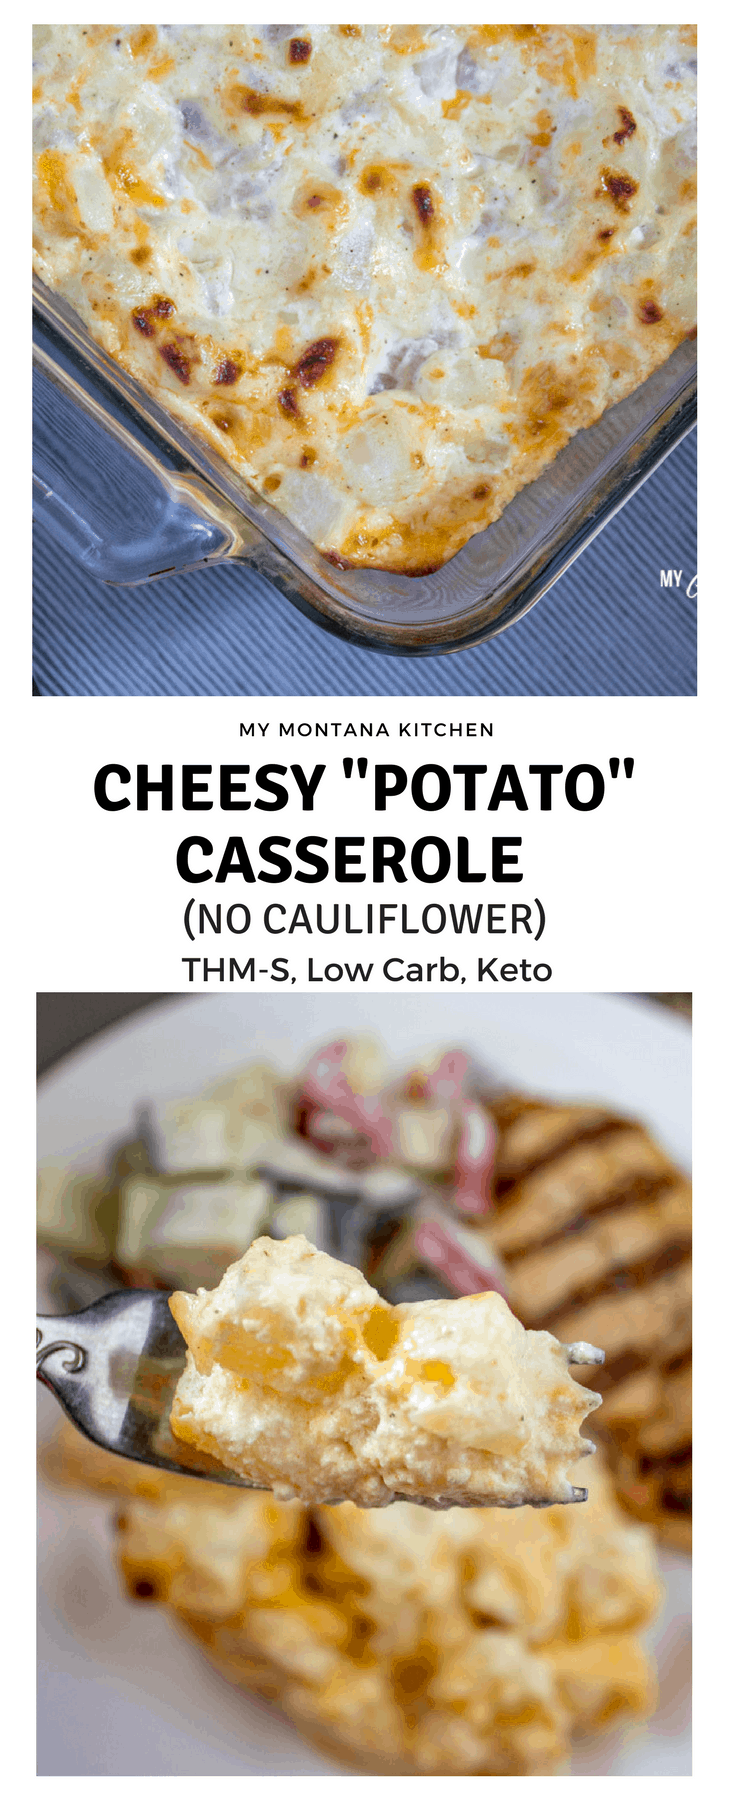 Cheesy "Potato" Casserole (Low Carb, THM-S, Keto) #trimhealthymama #thms #lowcarb #keto #cheesypotatoes #fauxpotatoes #lowcarbpotatoes